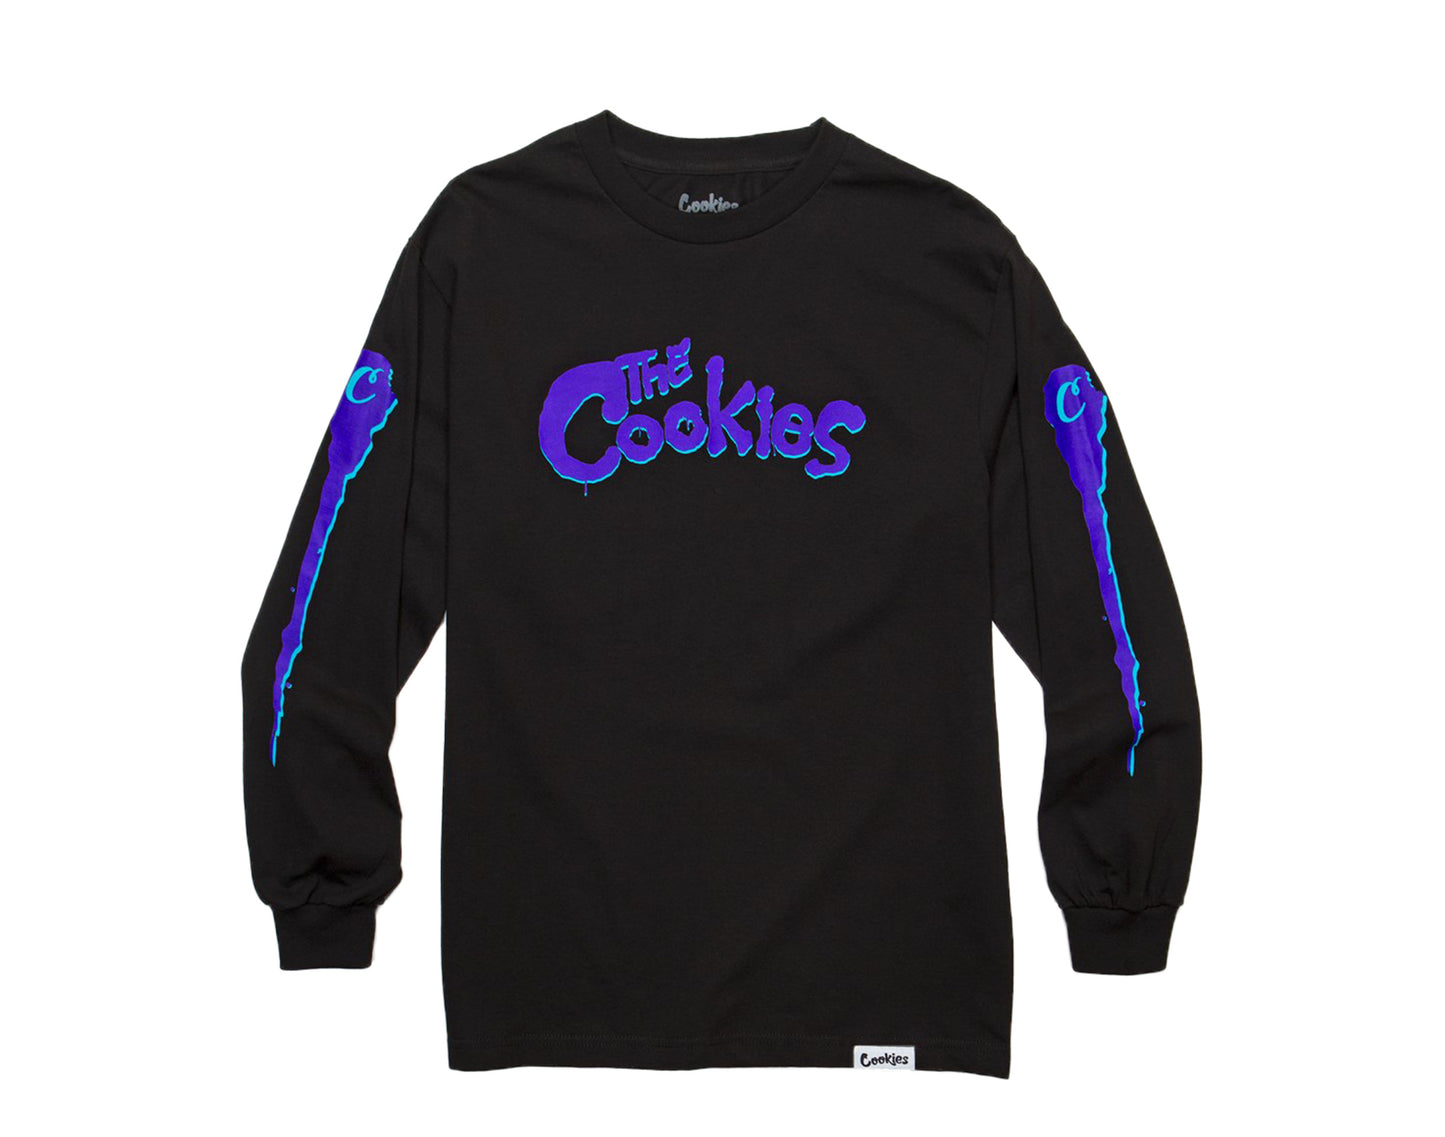 Cookies Cinemax Long Sleeve Black Men's Tee Shirt 1546T4373-BLK